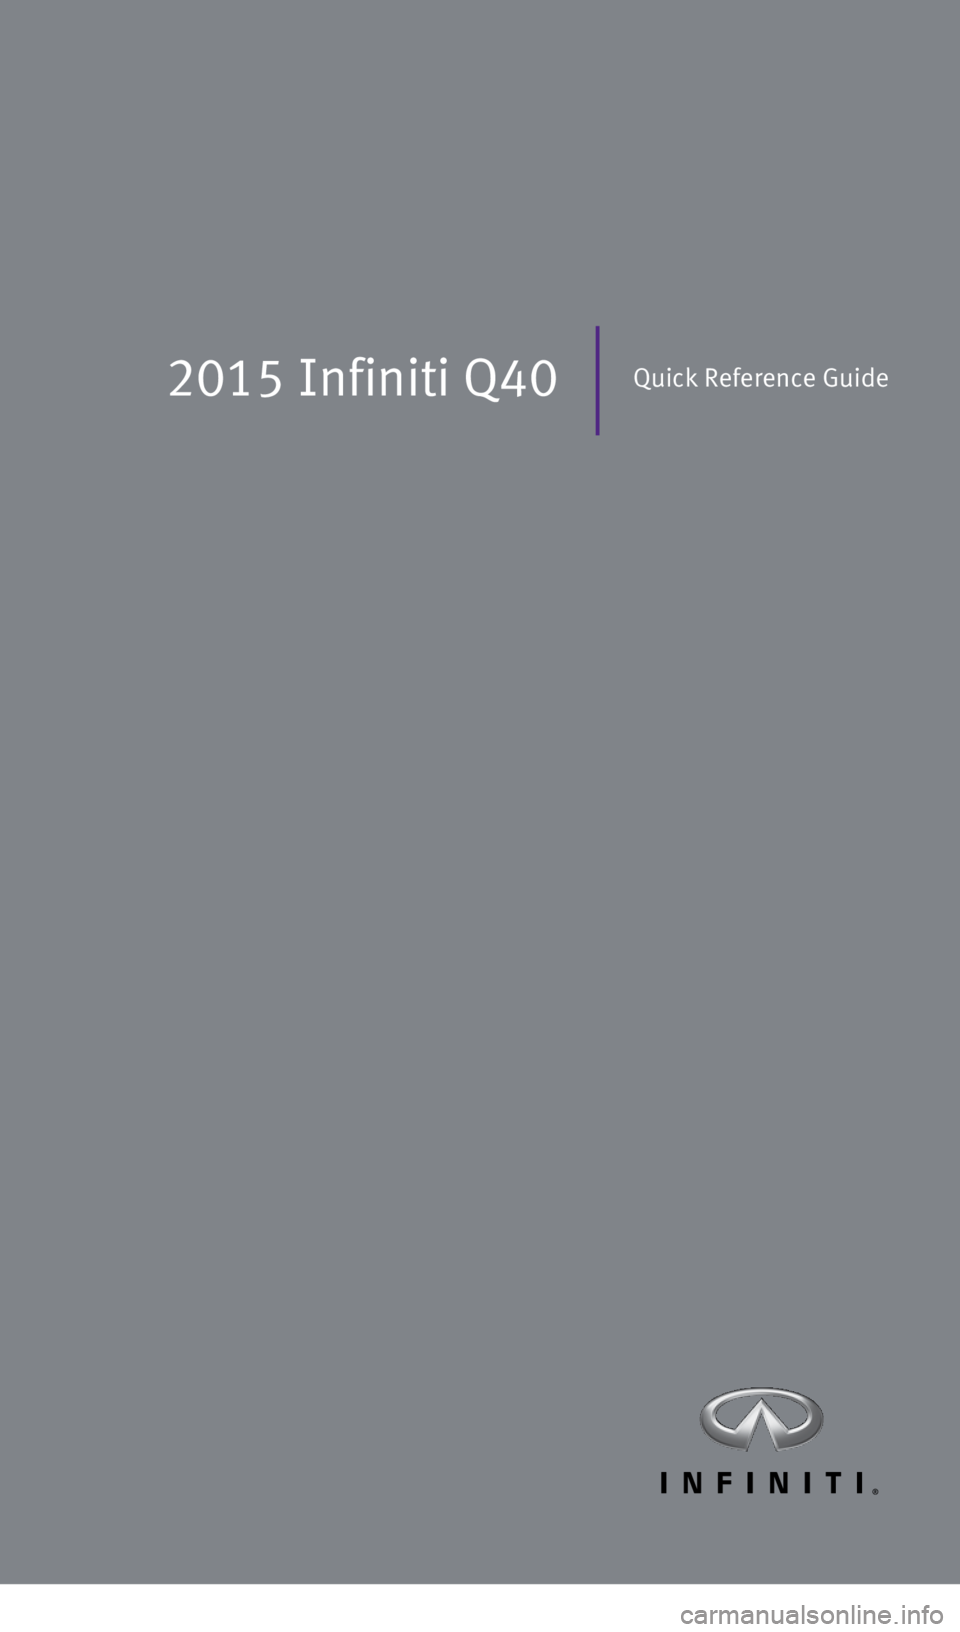 INFINITI Q40 2015  Quick Reference Guide 2015 Infiniti Q40Quick Reference Guide
1811809_15b_Infiniti_Q40_QRG_091014.indd   39/10/14   3:41 PM 